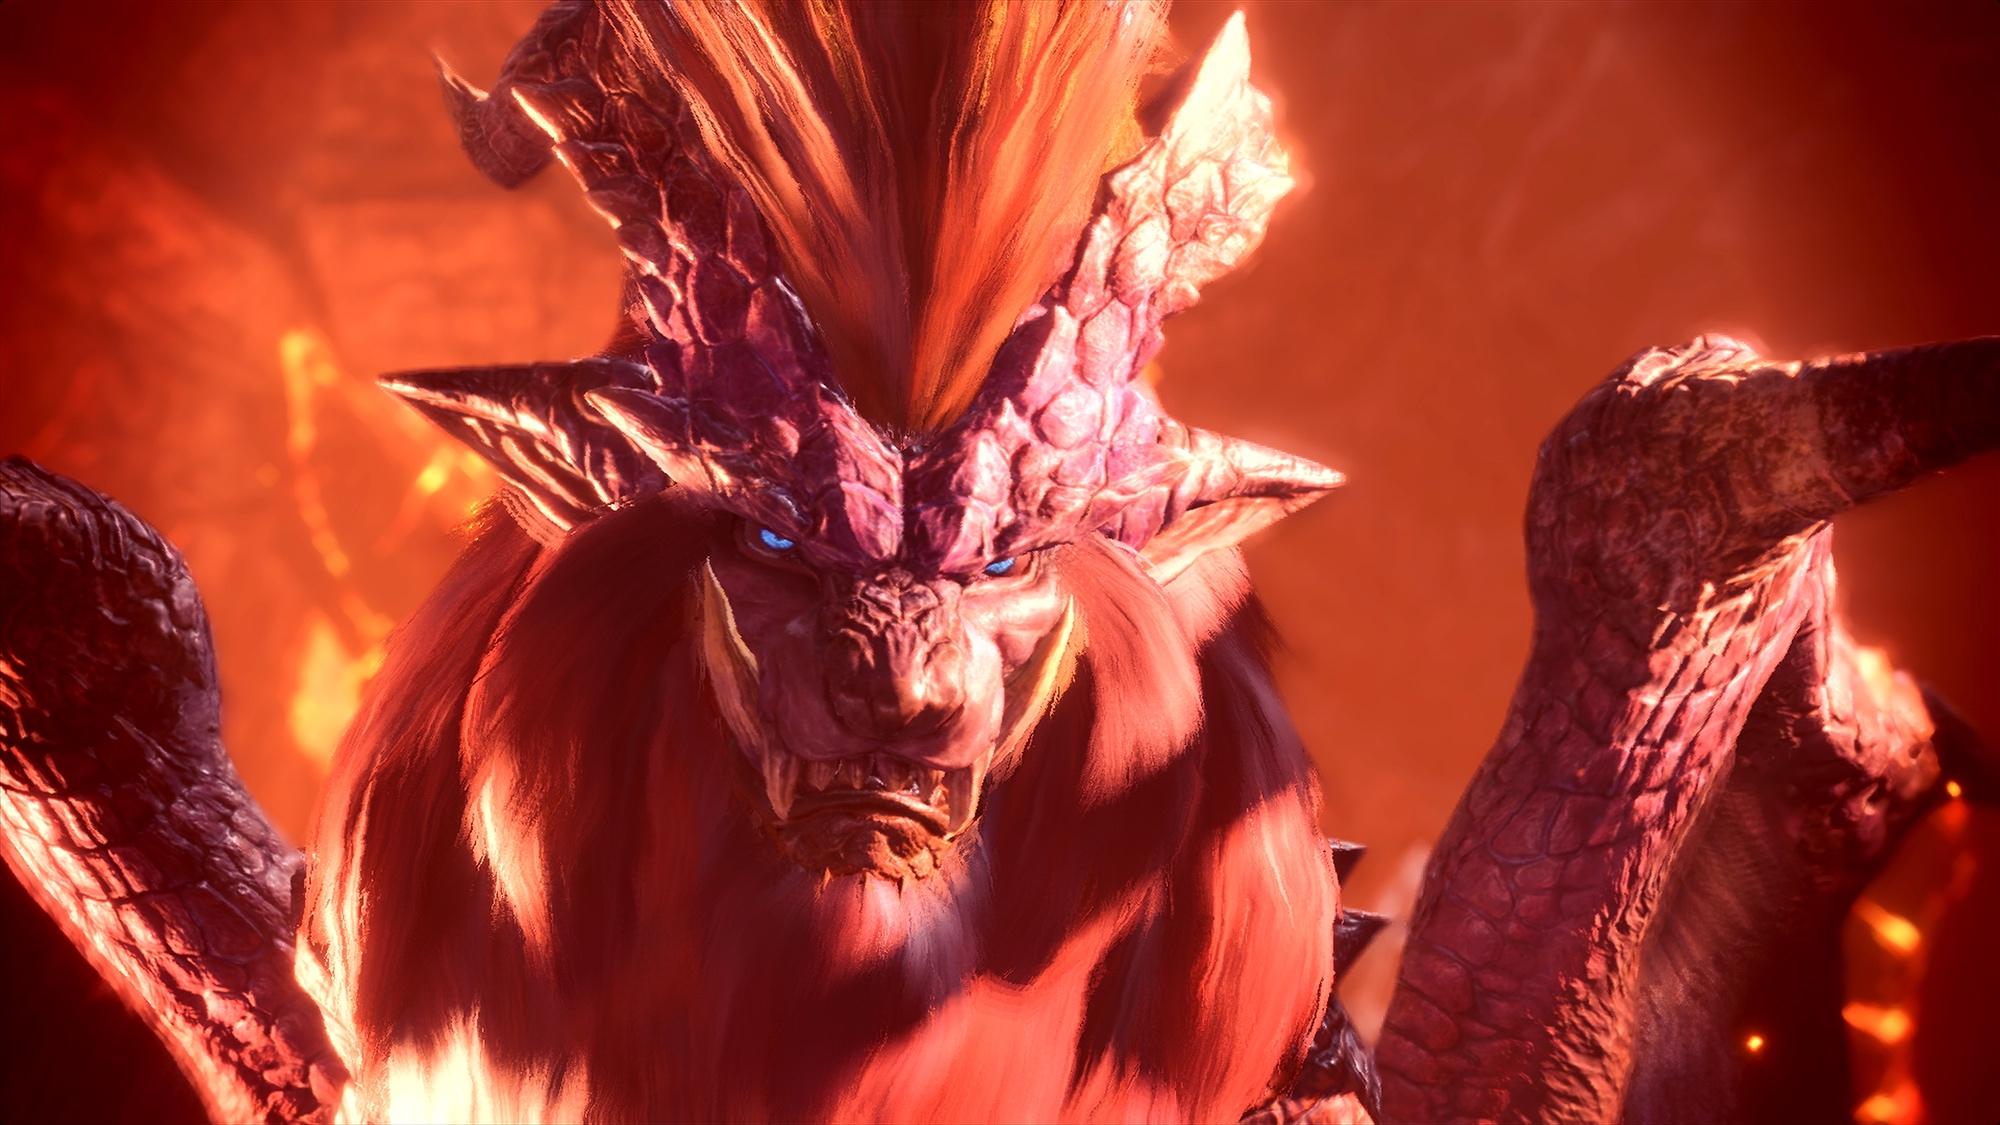 Monster Hunter: World's Elder Dragons look spectacular